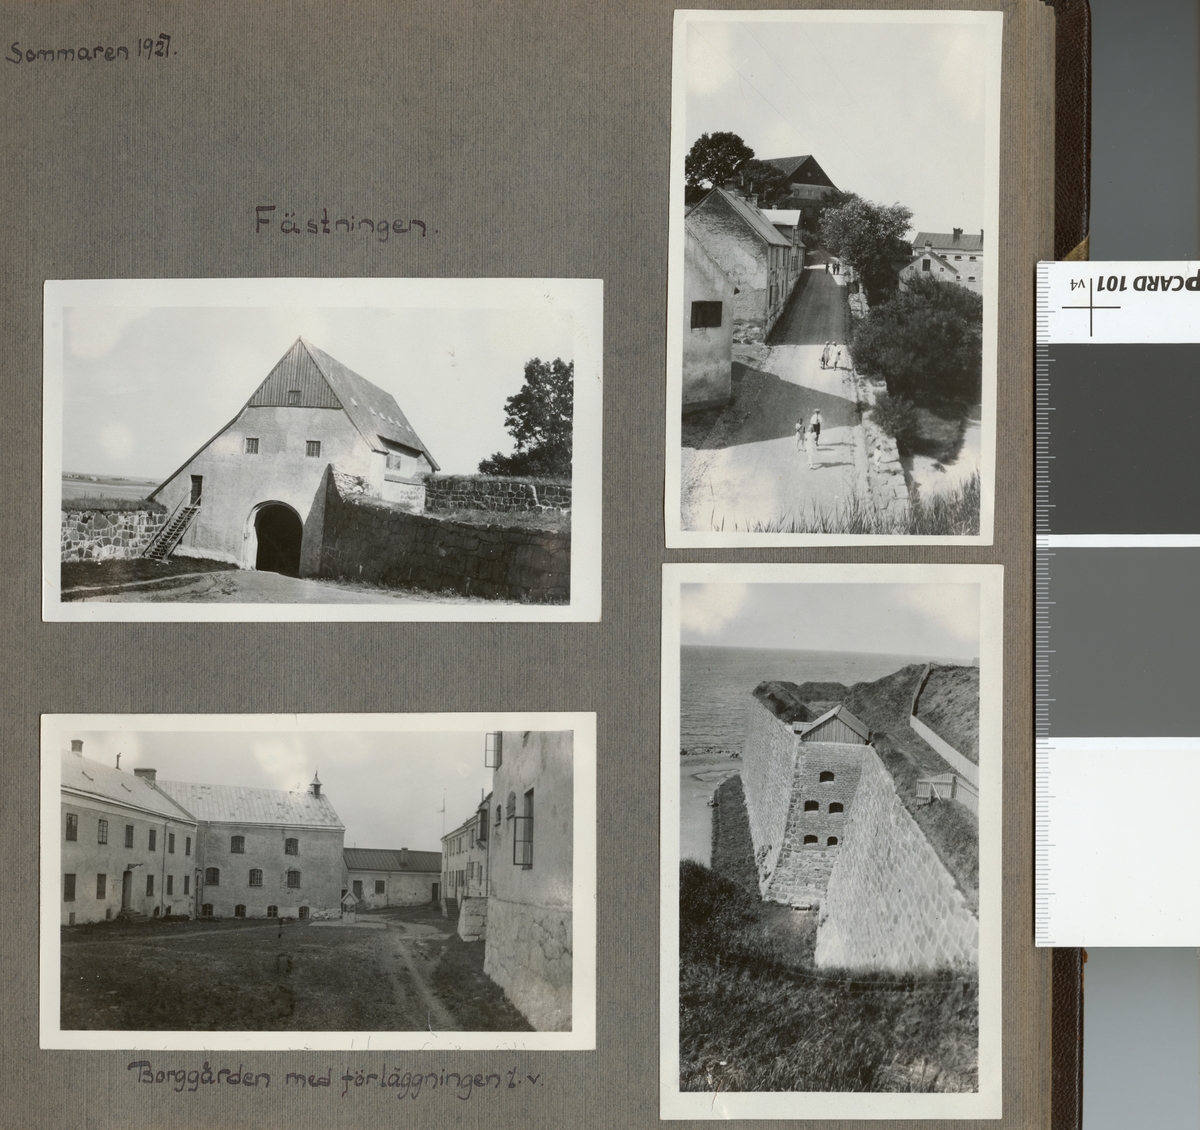 Text i fotoalbum: "Krigsskolan 10 okt 1926 - 31 dec 1927. Sommaren 1927. Skillingaryd - Varberg, sommaren 1927. Fästningen".